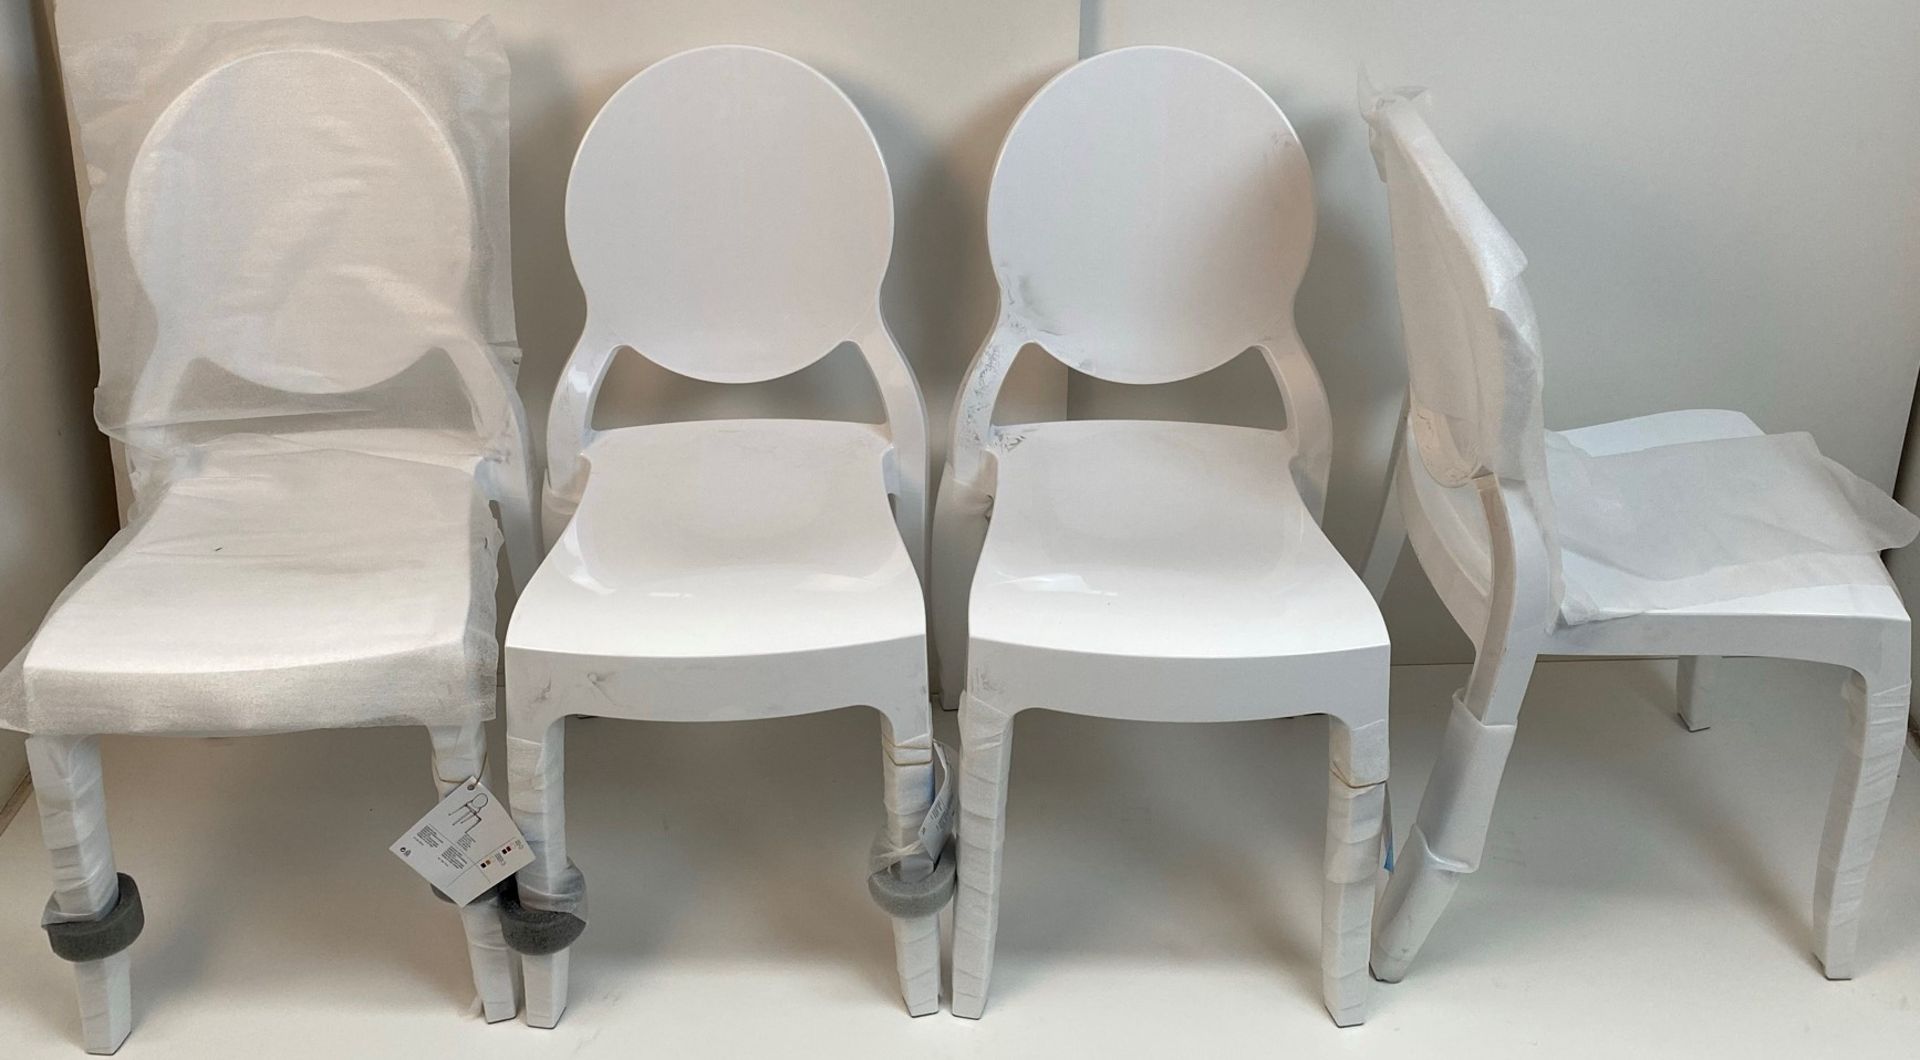 4 x Siesta Elizabeth Glossy White Stacking Chairs - (Boxed)